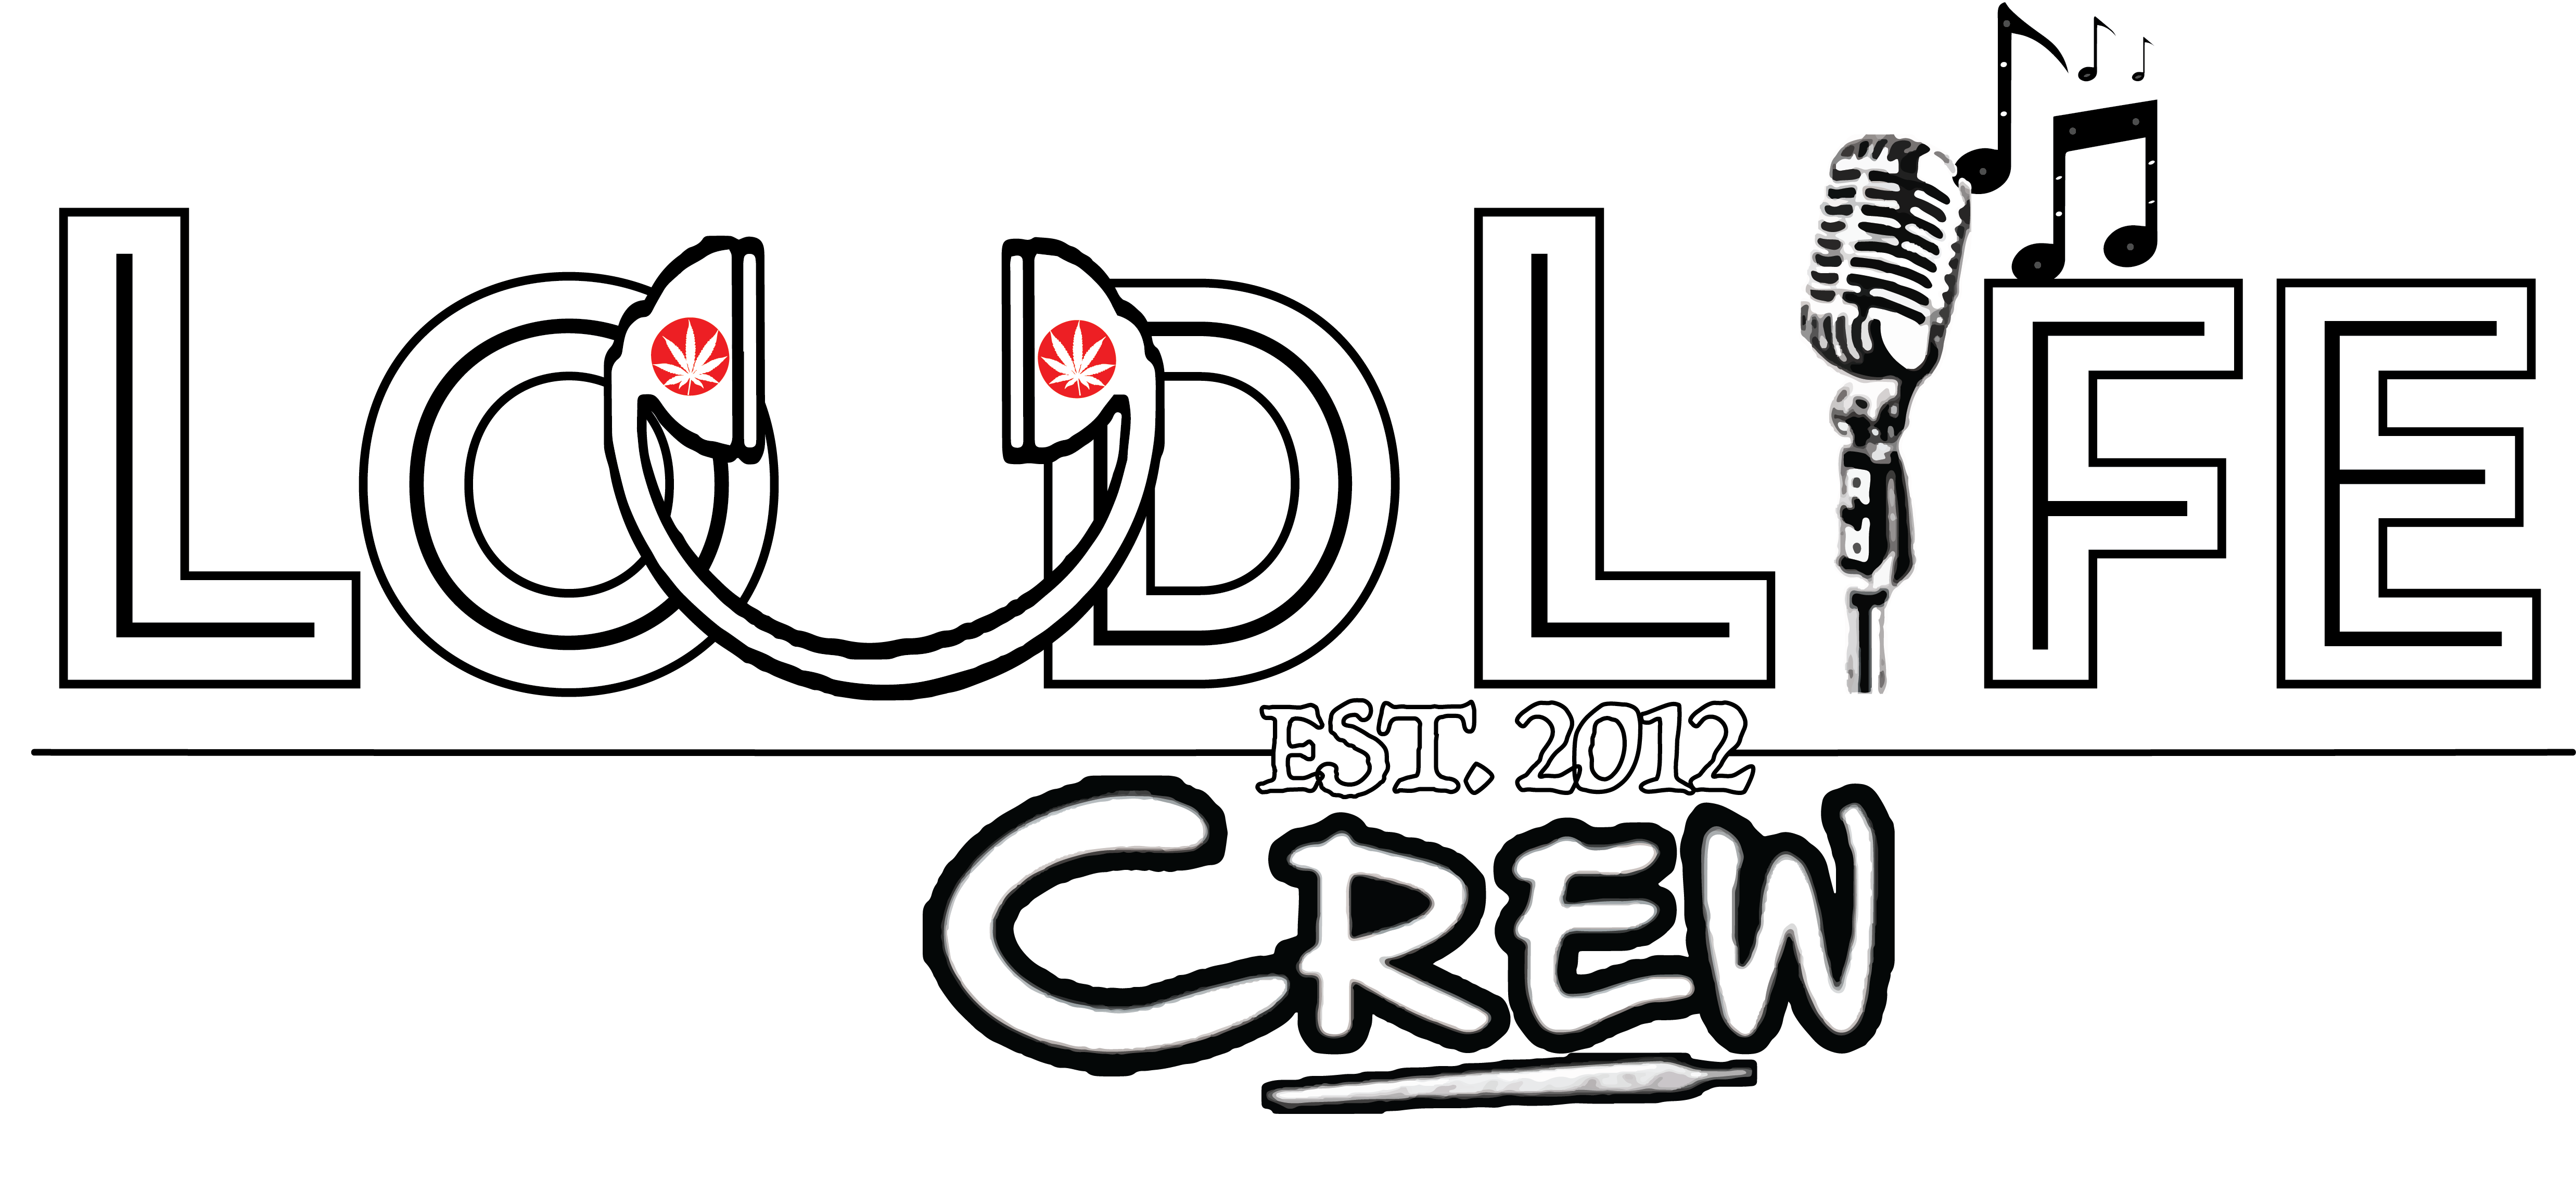 LoUd Life Crew, LLC&nbsp;